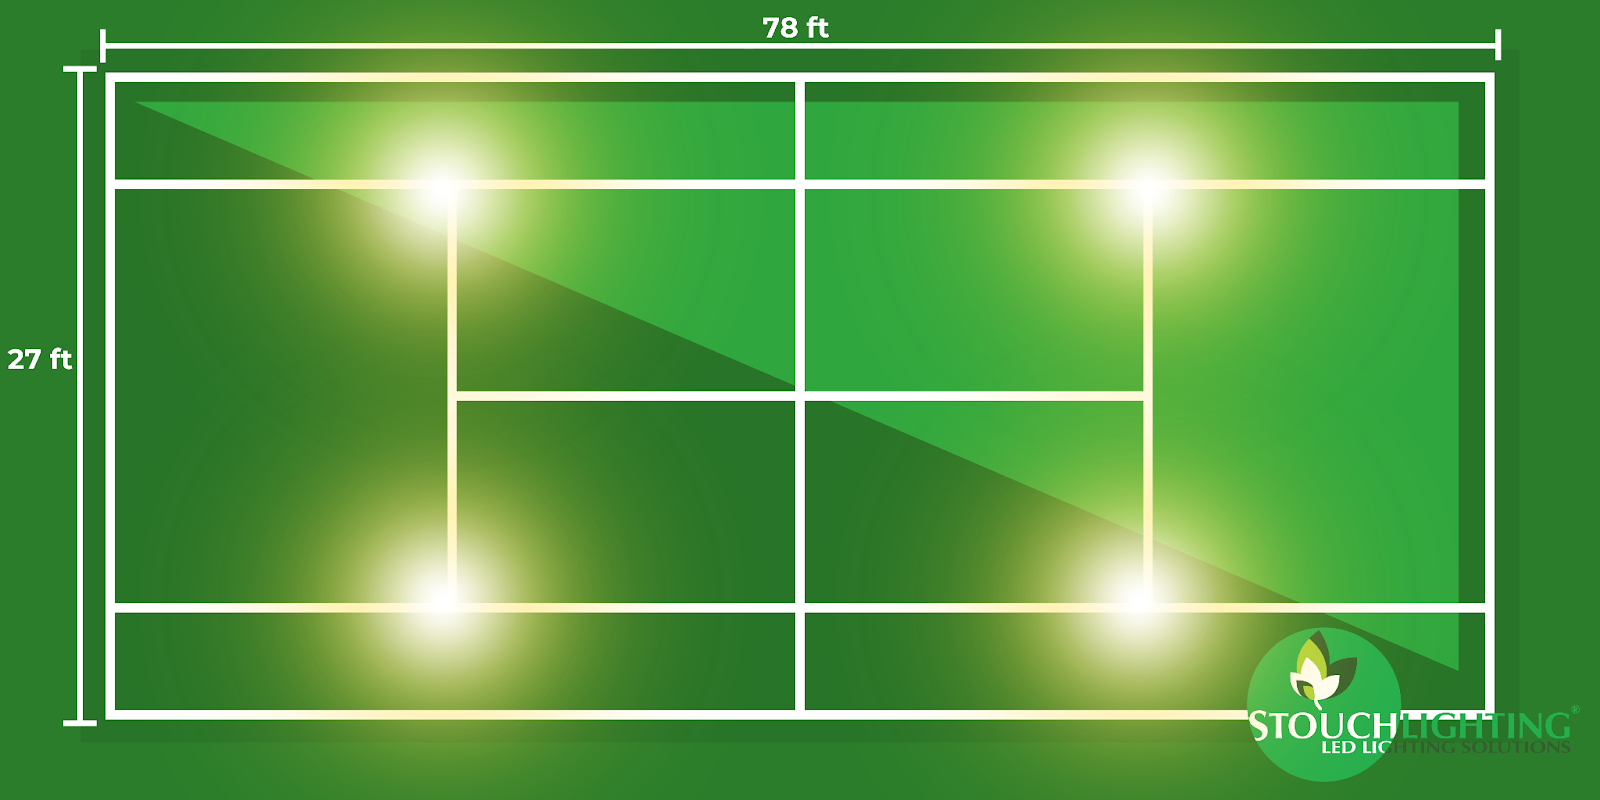 Singles tennis court lighting layout